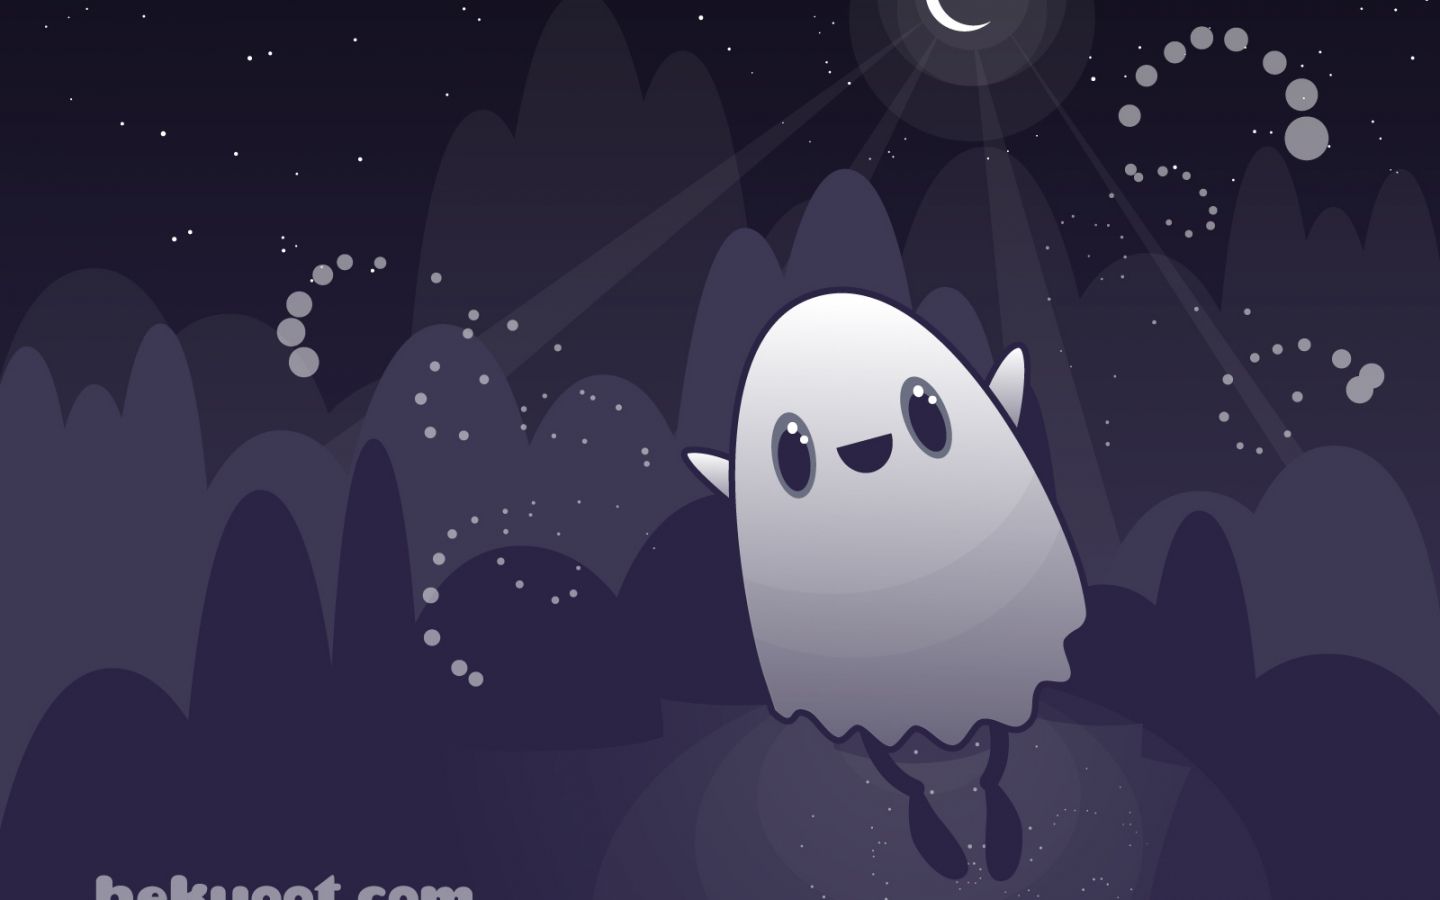 Ghost iPhone wallpaper  Halloween screen savers Halloween wallpaper  iphone Halloween wallpaper backgrounds